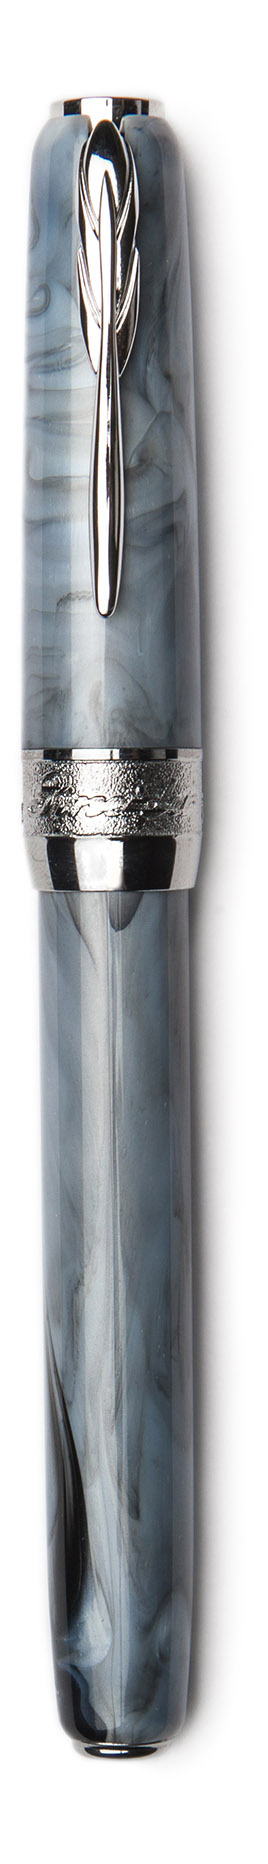 Full Metal Fountain Pen